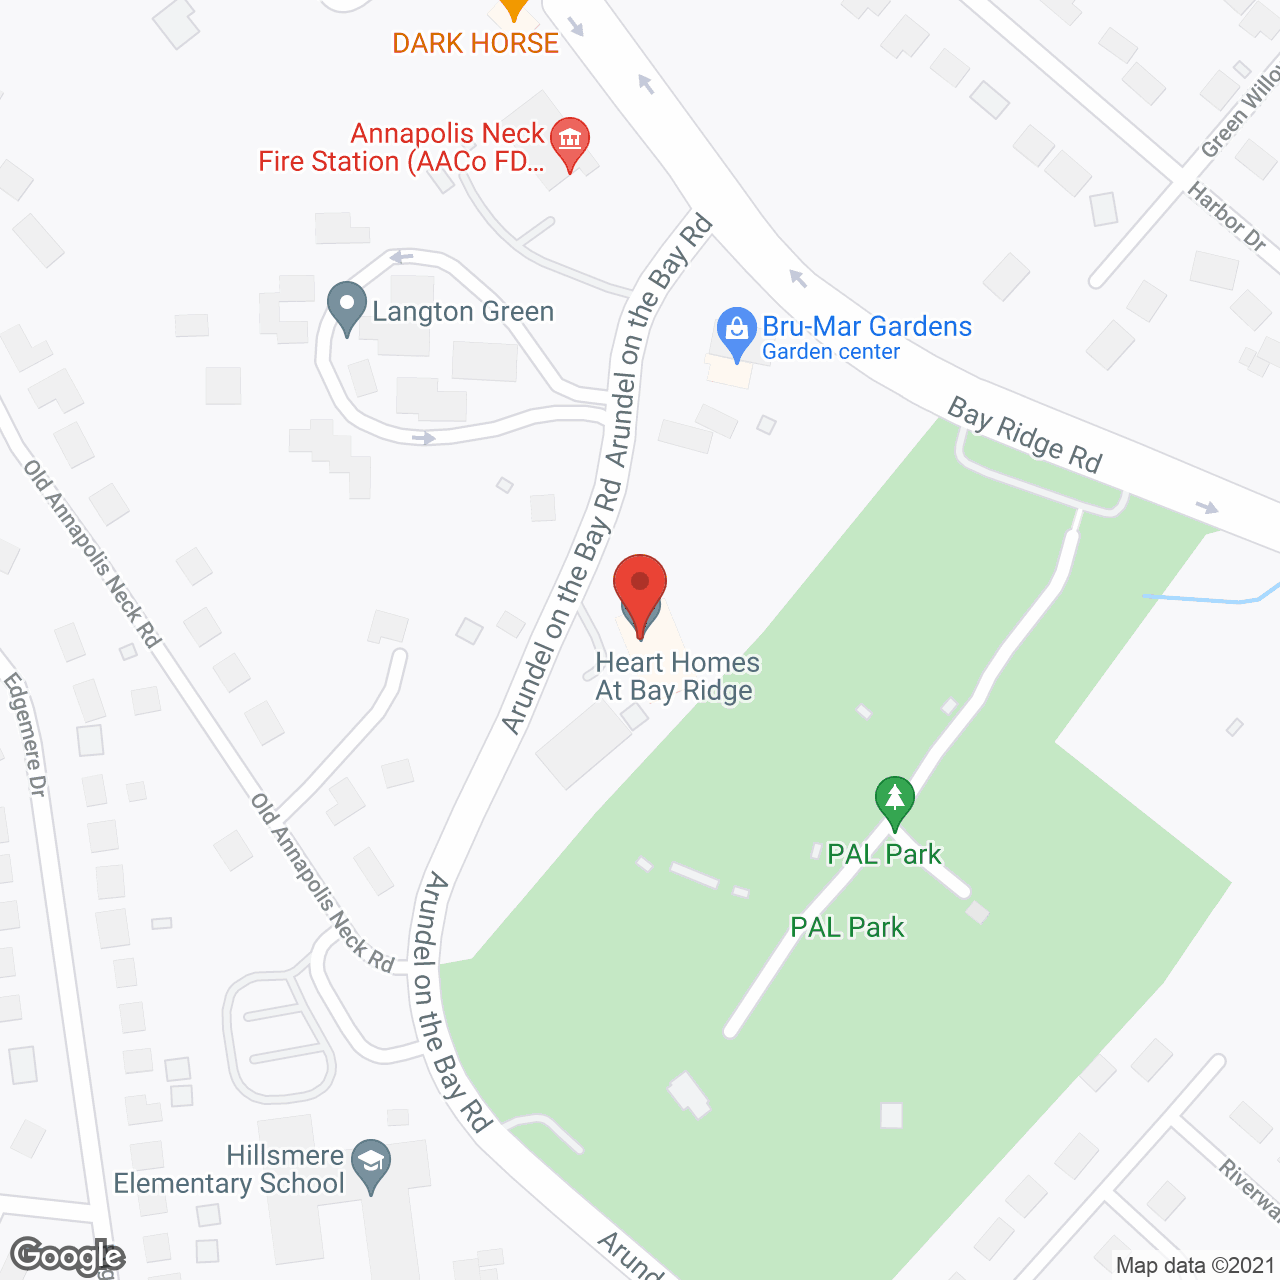 HeartHomes at Bay Ridge in google map